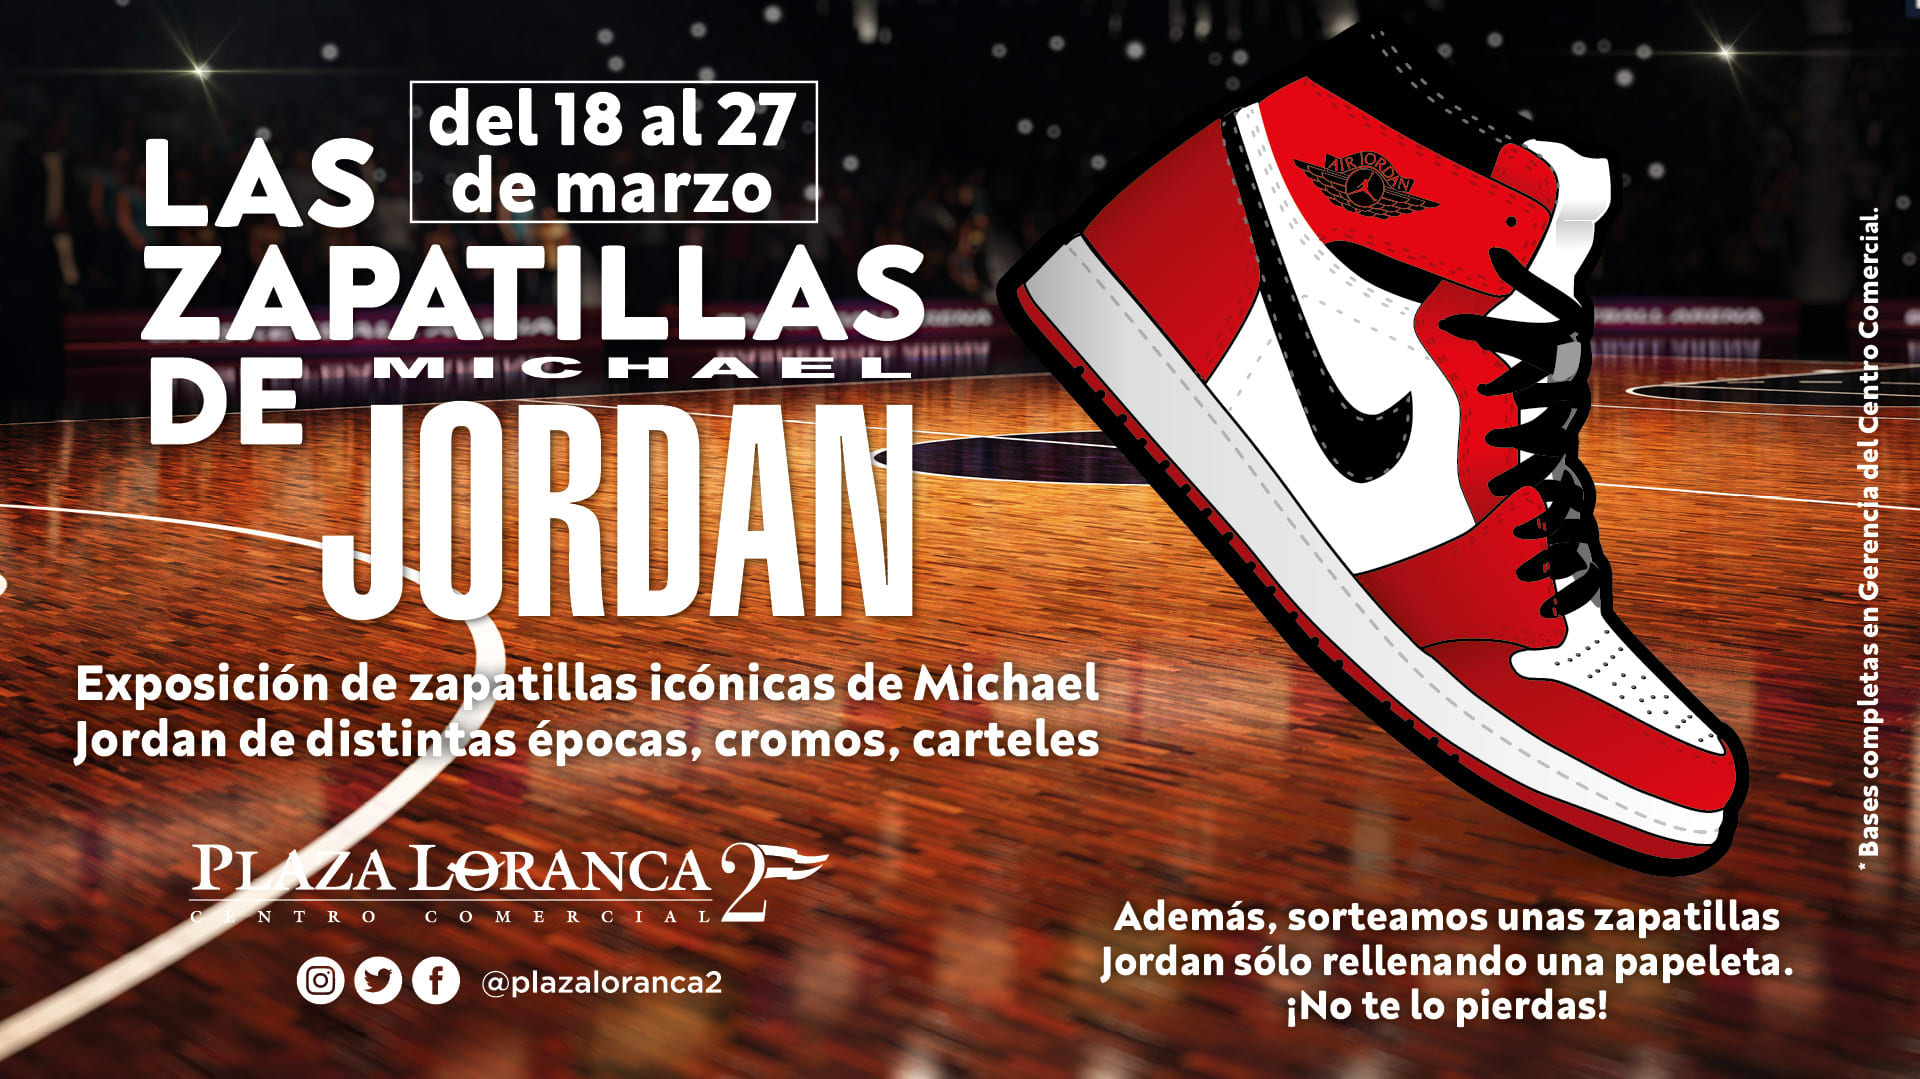 Exposición zapatillas Michael Jordan en Valencia, Las zapatillas de  Michael Jordan revolucionan Valencia